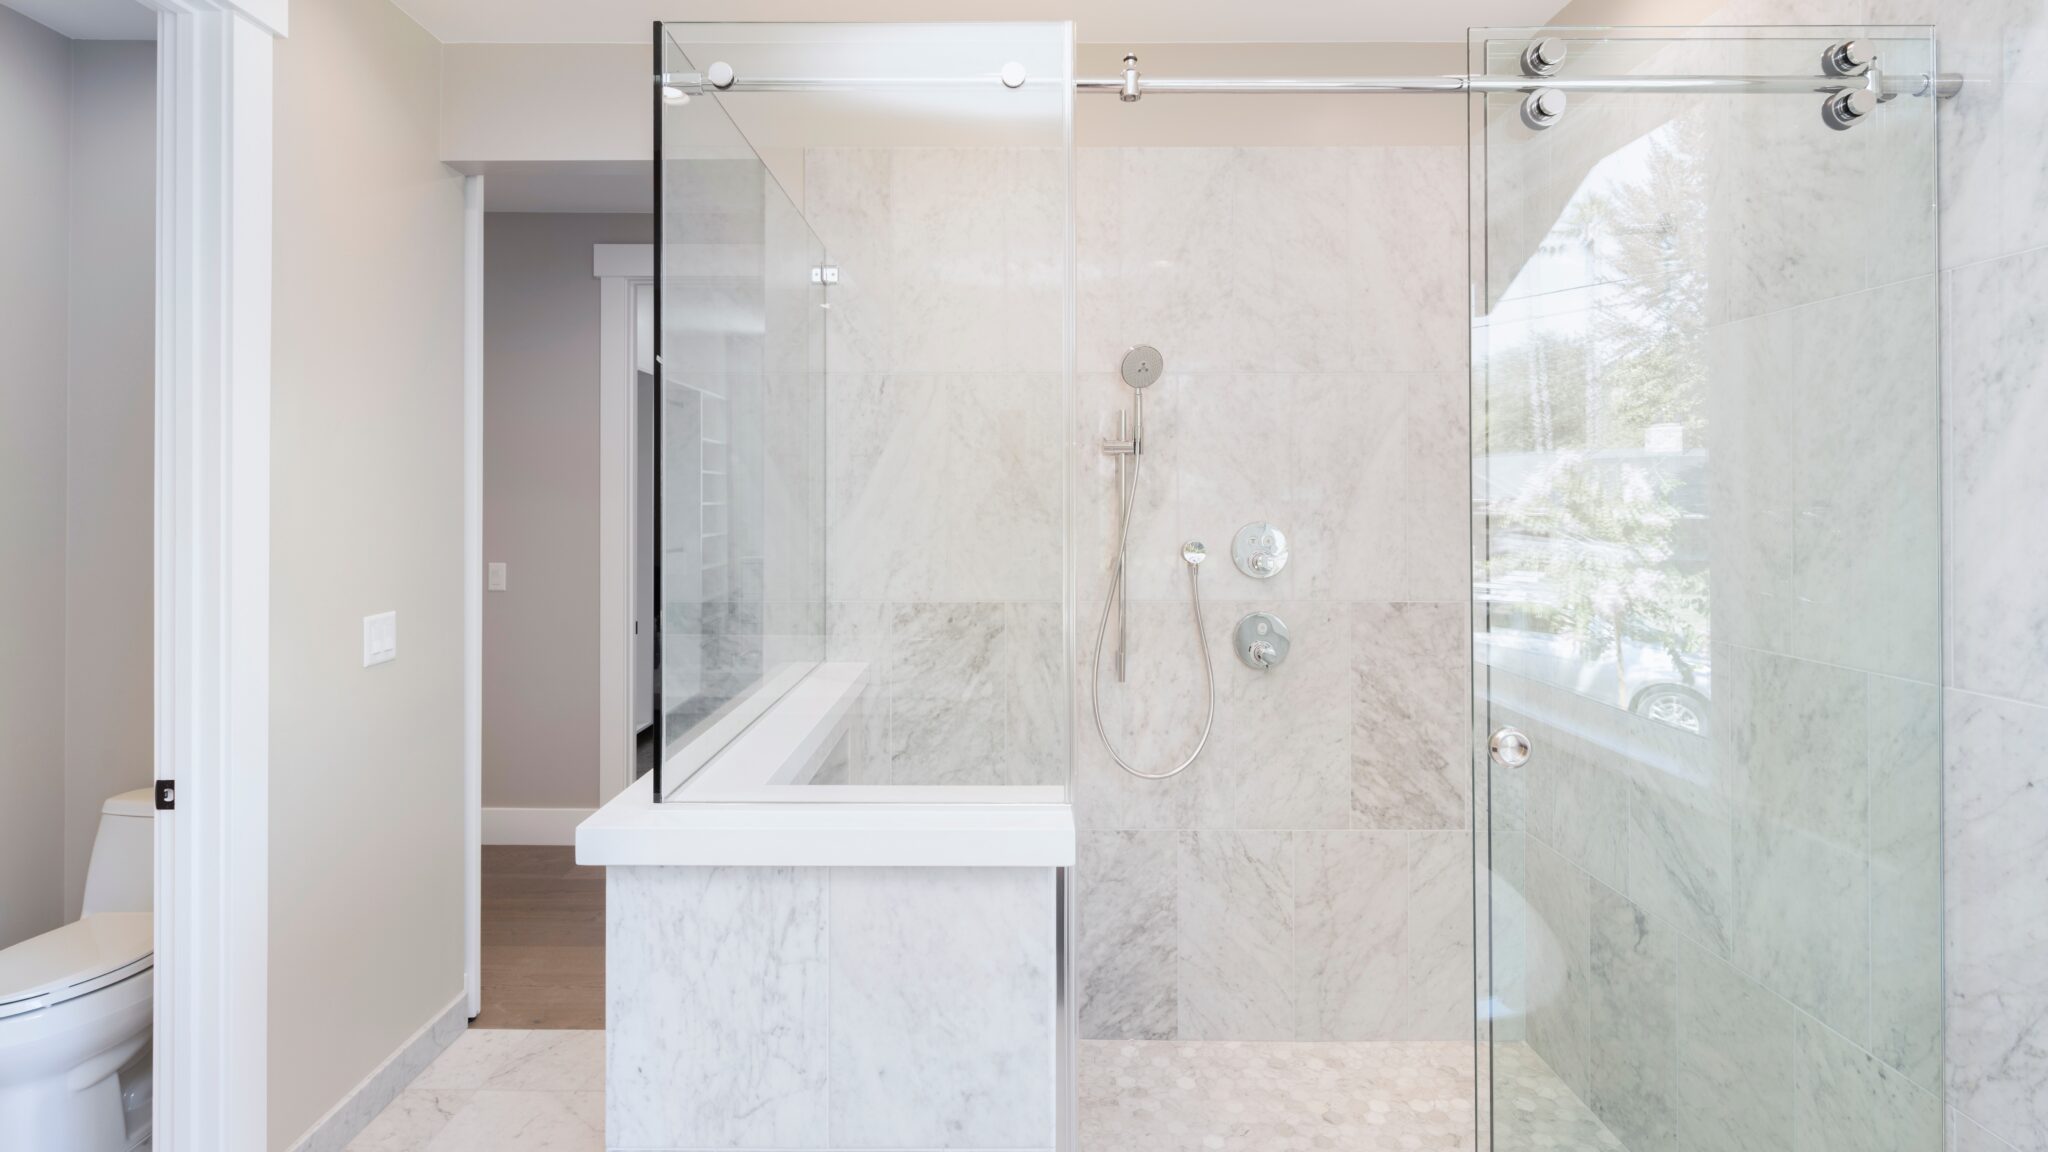 Brand new glass shower door installed by GoGlass in white tiled bathroom in Dover DE